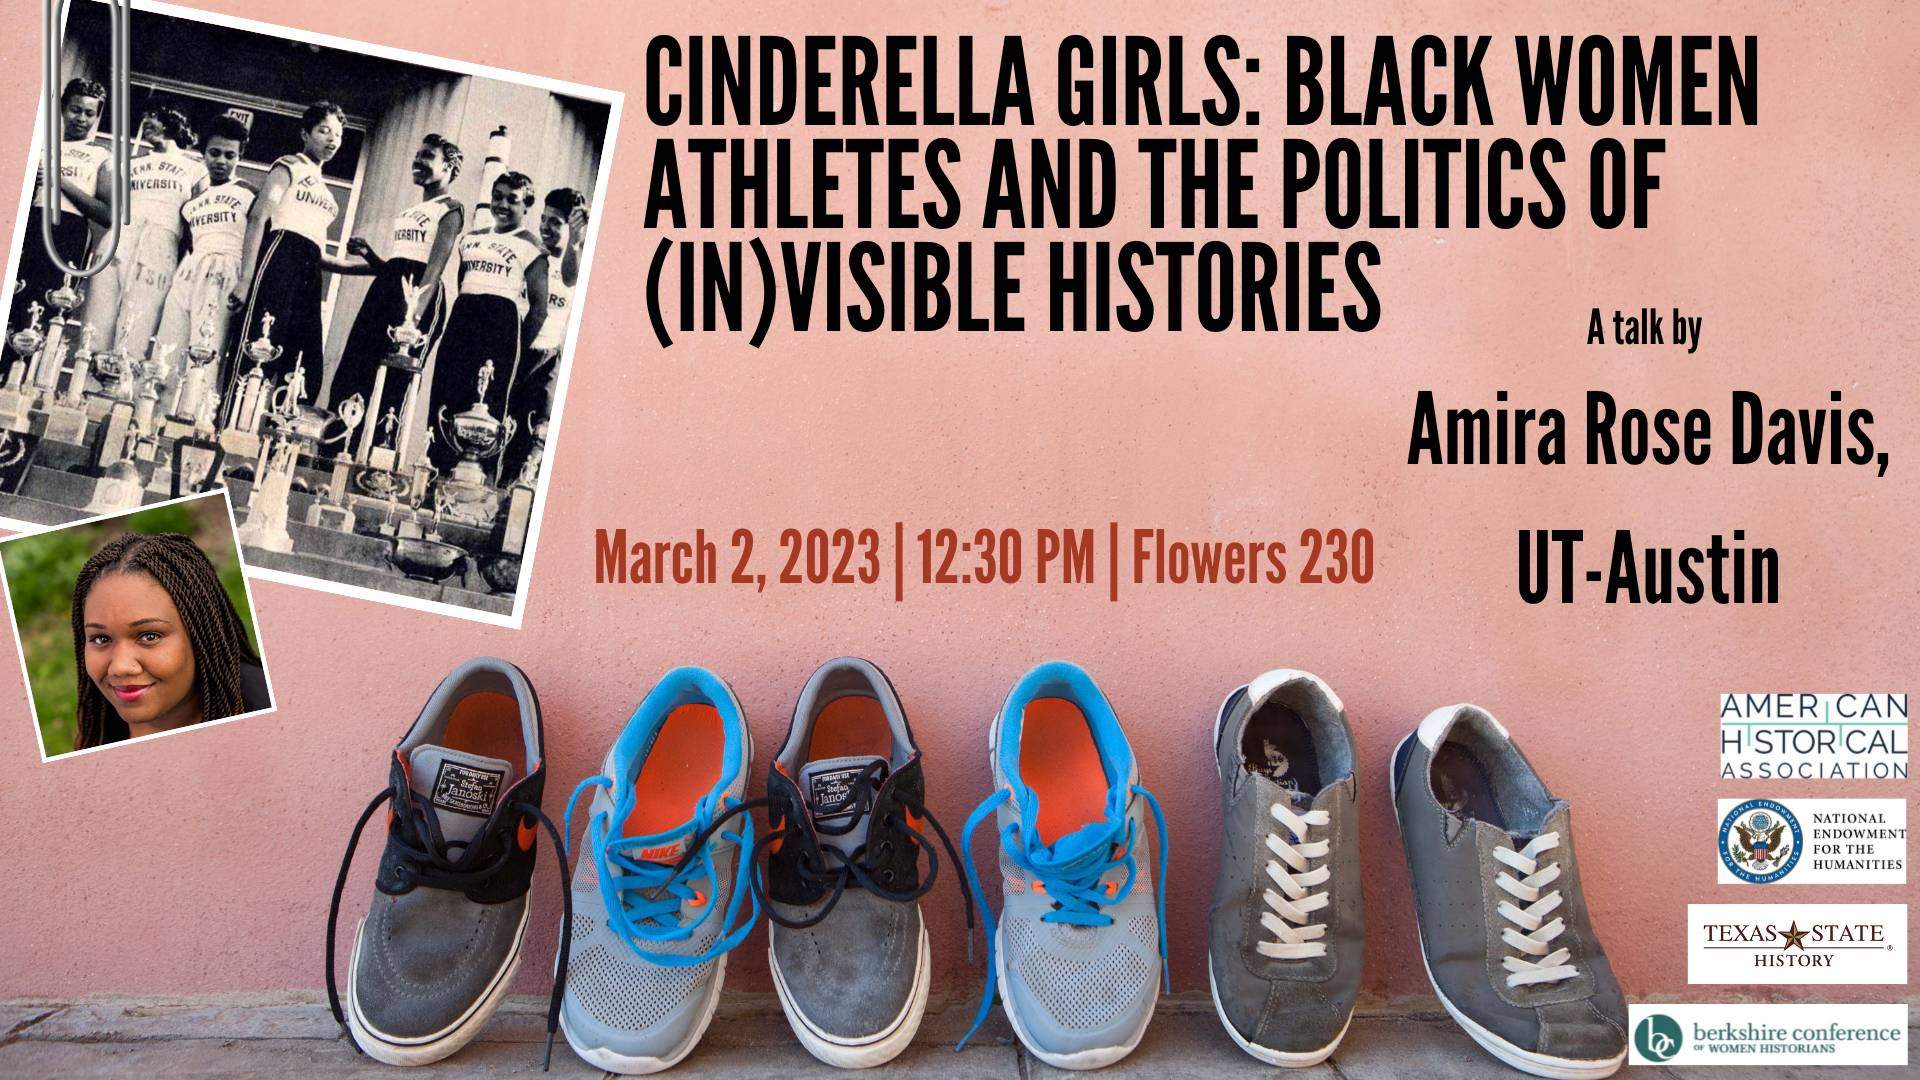 Cinderella Girls Event Image